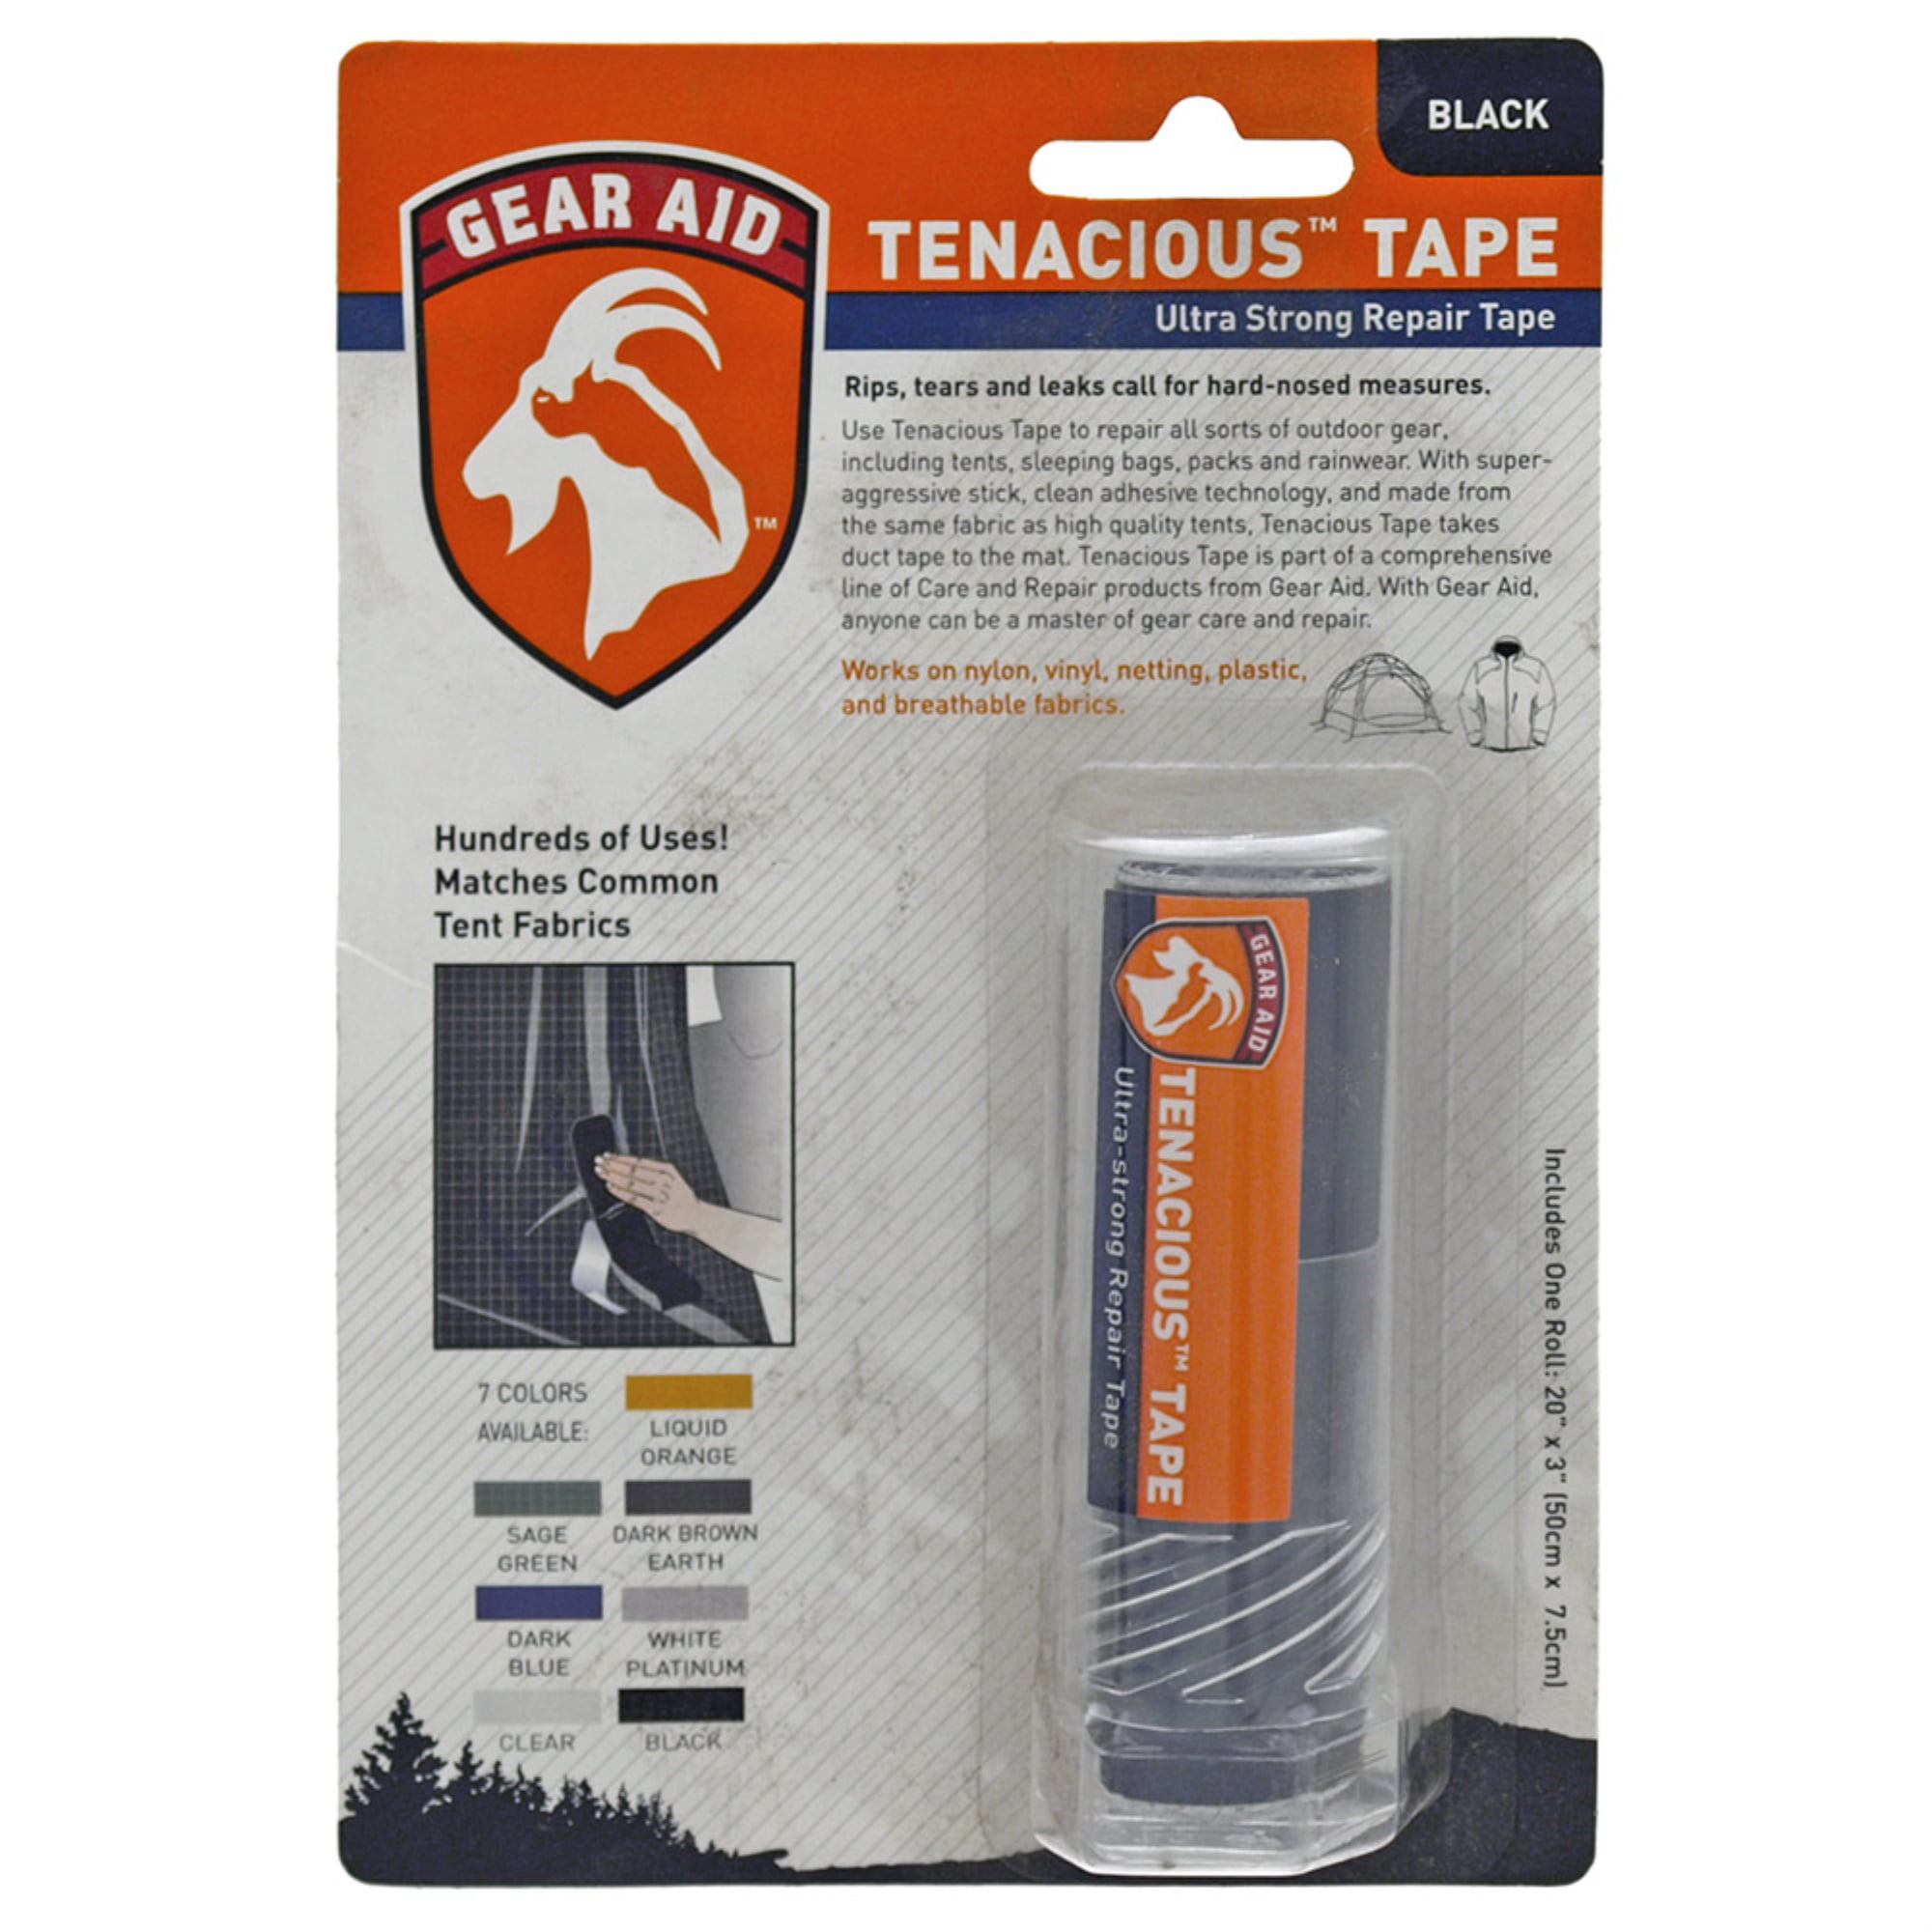 4-Pack Gear Aid Tenacious Tape Repair Tape Black 3"x20" Ultra Strong Flexible 